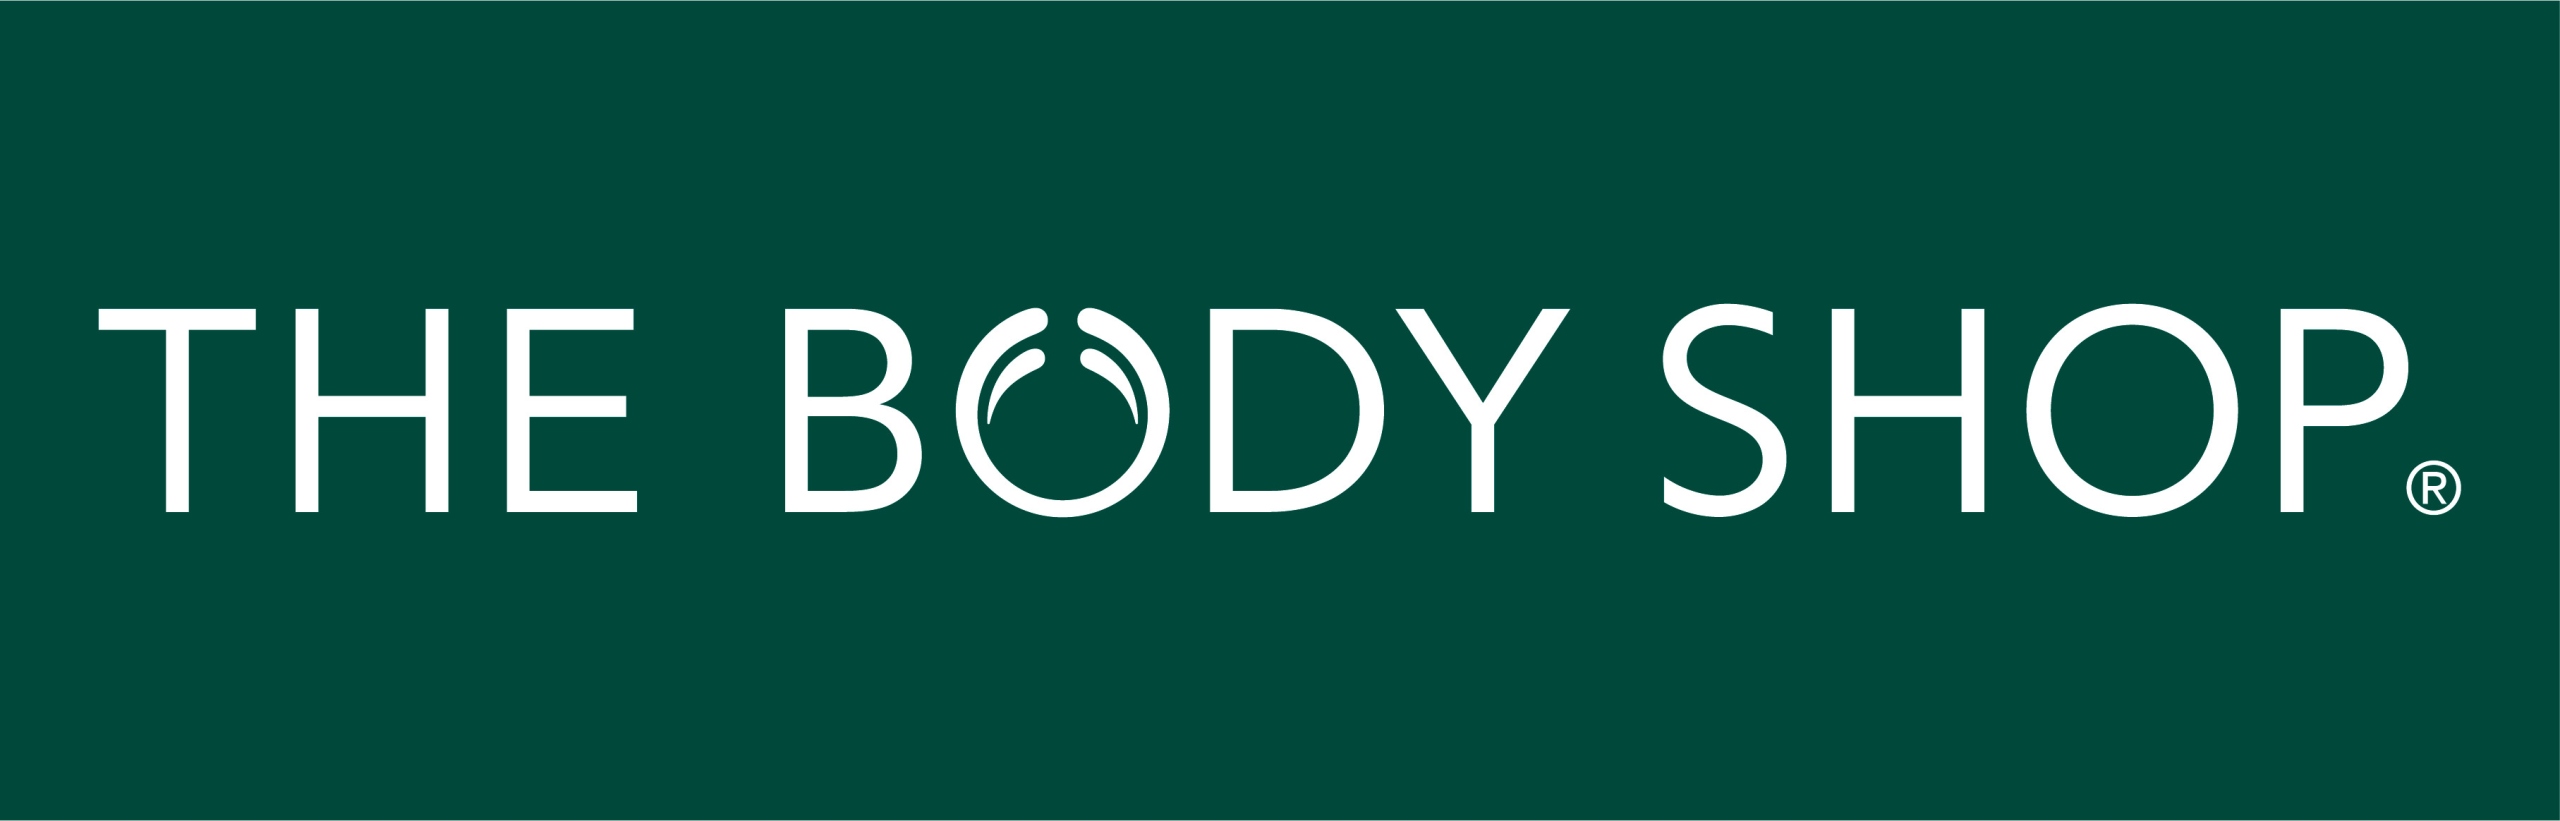 Бодишоп. The body shop логотип. The body shop логотип без фона. The body shop логотип 2021. Resale shop логотип.